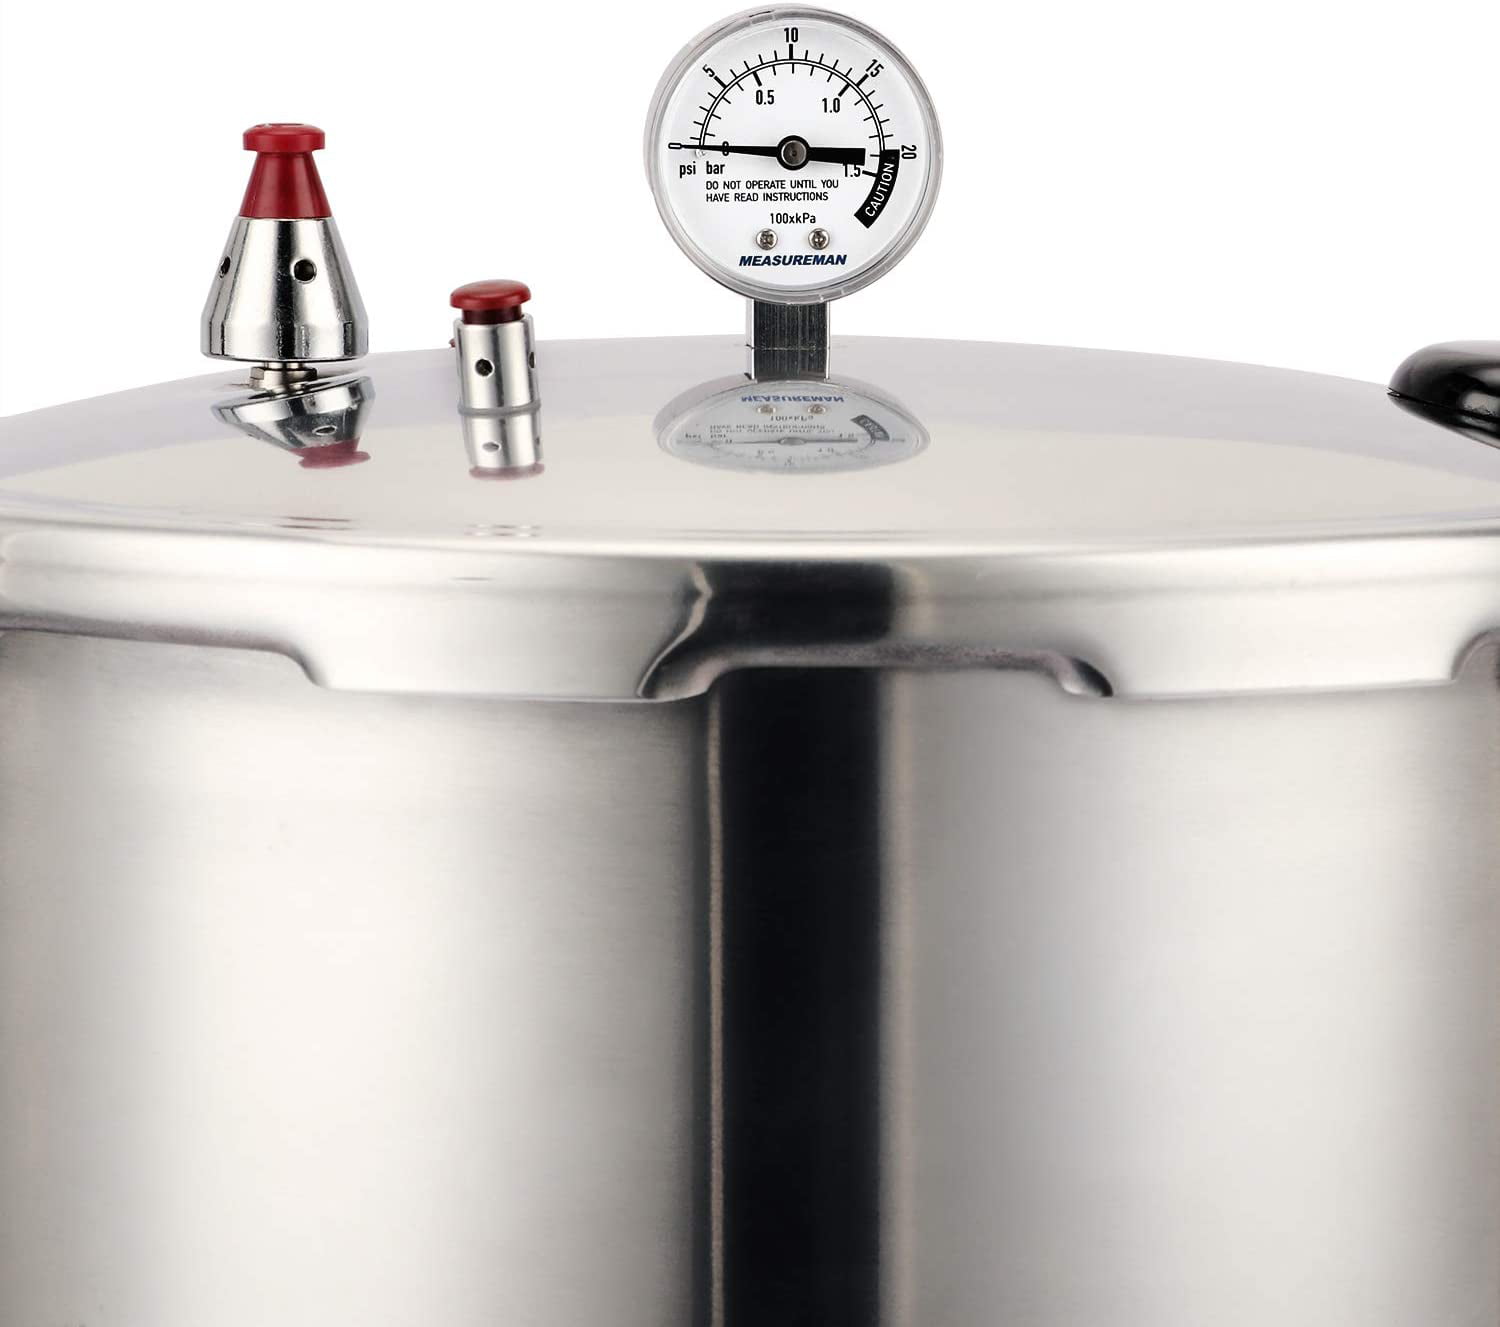 Steam Pressure Gauge Washer and Nut Measureman Stainless Steel Pressure Cooker Gauge 2 Dial Pressure Canner Gauge Including Gasket Lower Mount 